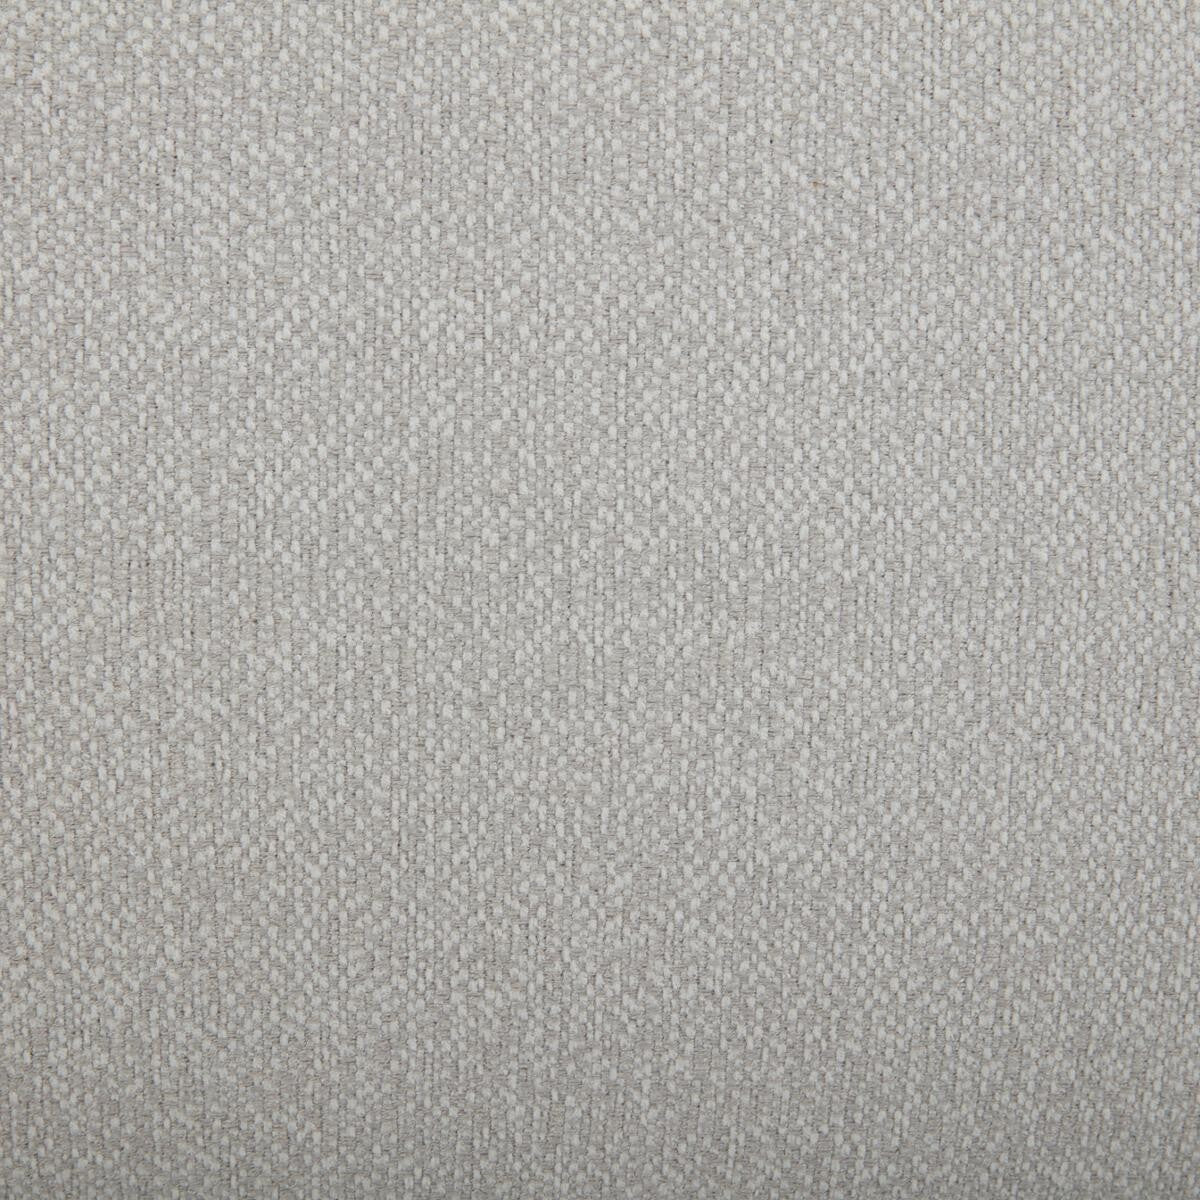 BEAU Daphne fabric sofa - 1.5-seater - L113xD97xH80cm - Pearl gray